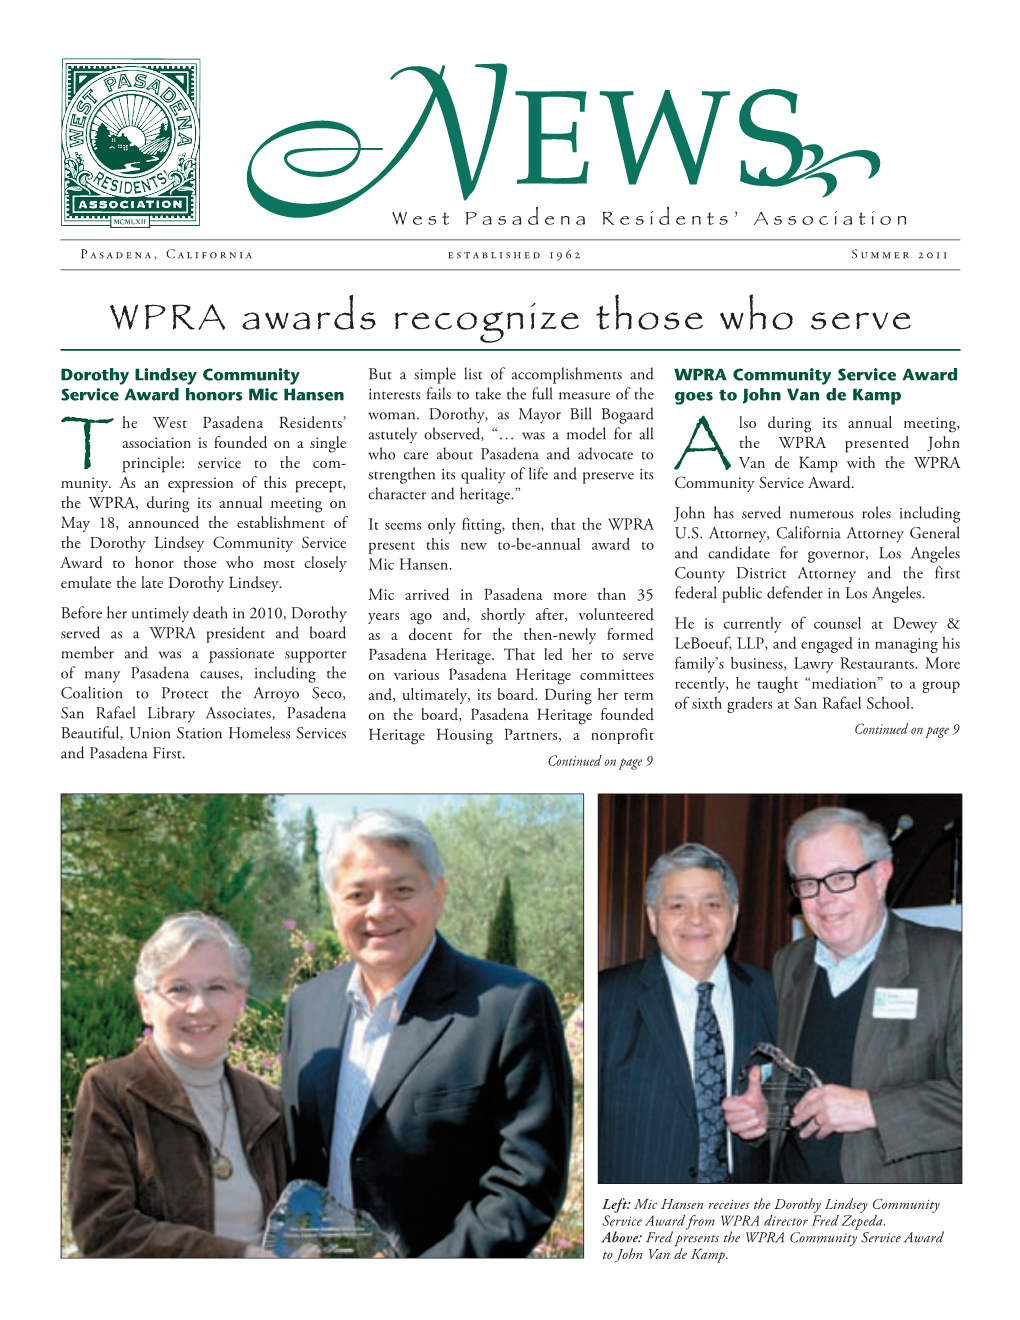 WPRA Awards Recognize Those Who Serve